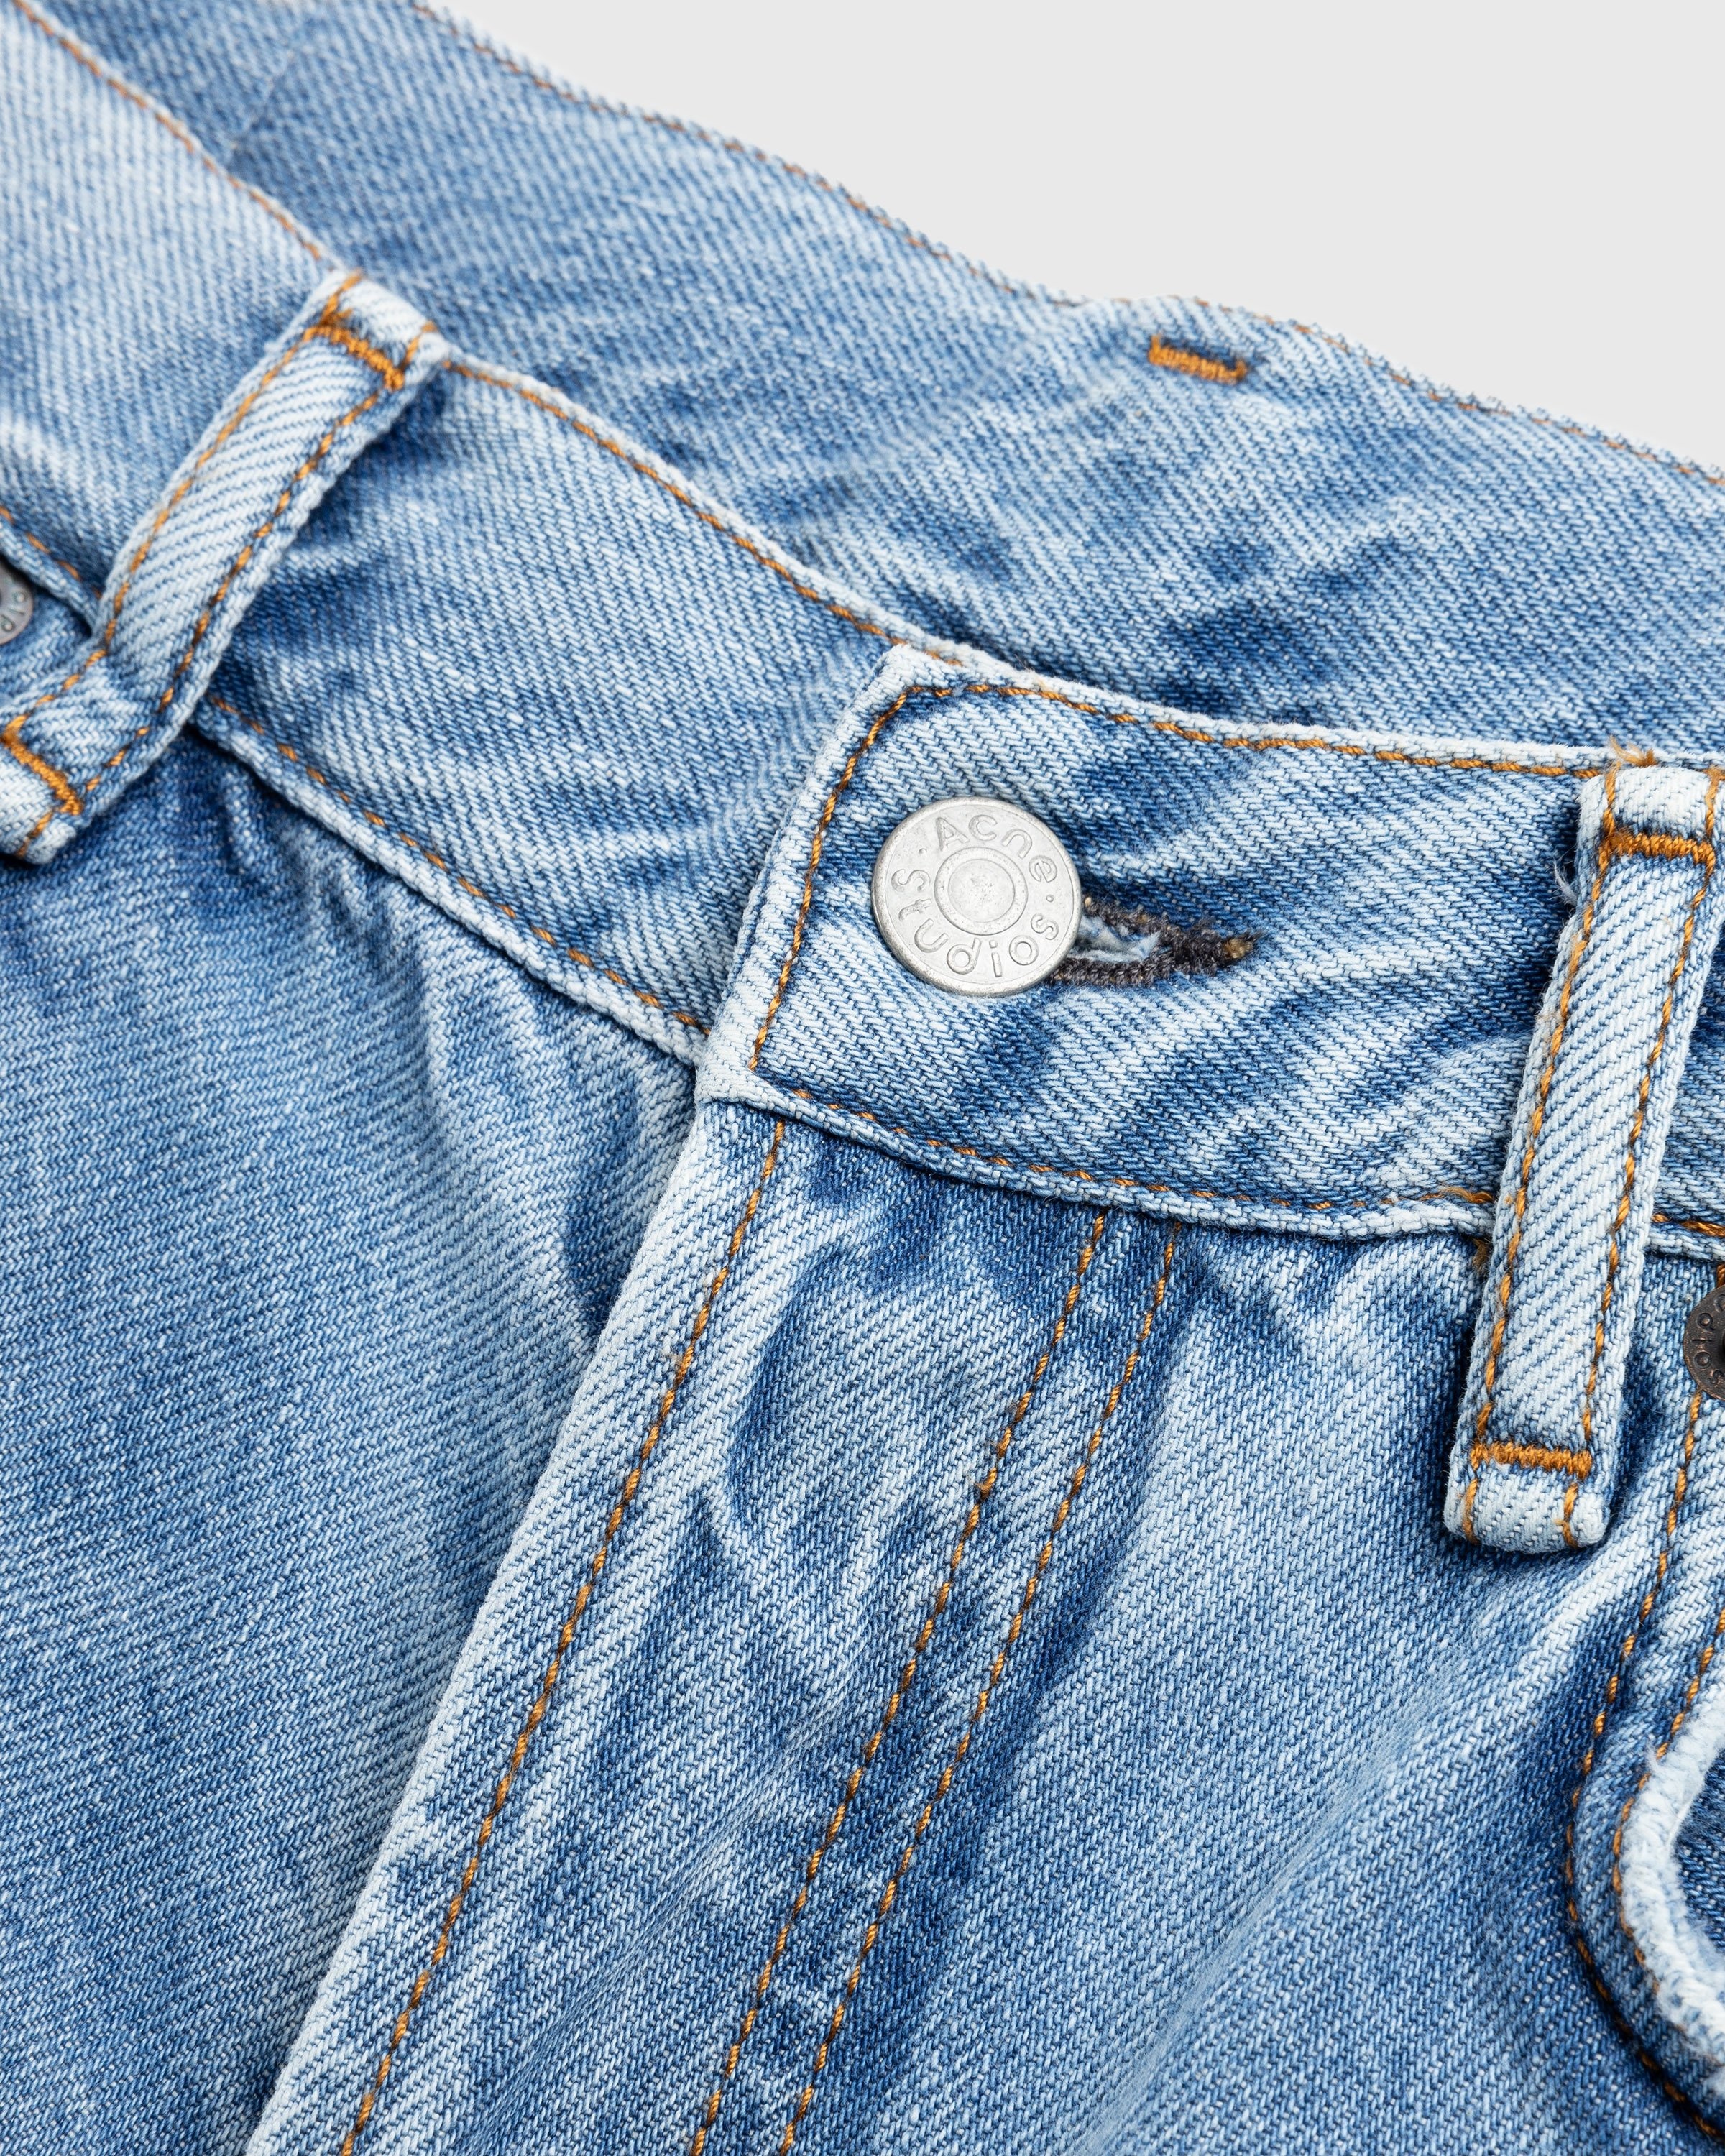 Acne Studios – Regular Fit Jeans 1992 Light Blue Vintage - Pants - Blue - Image 5